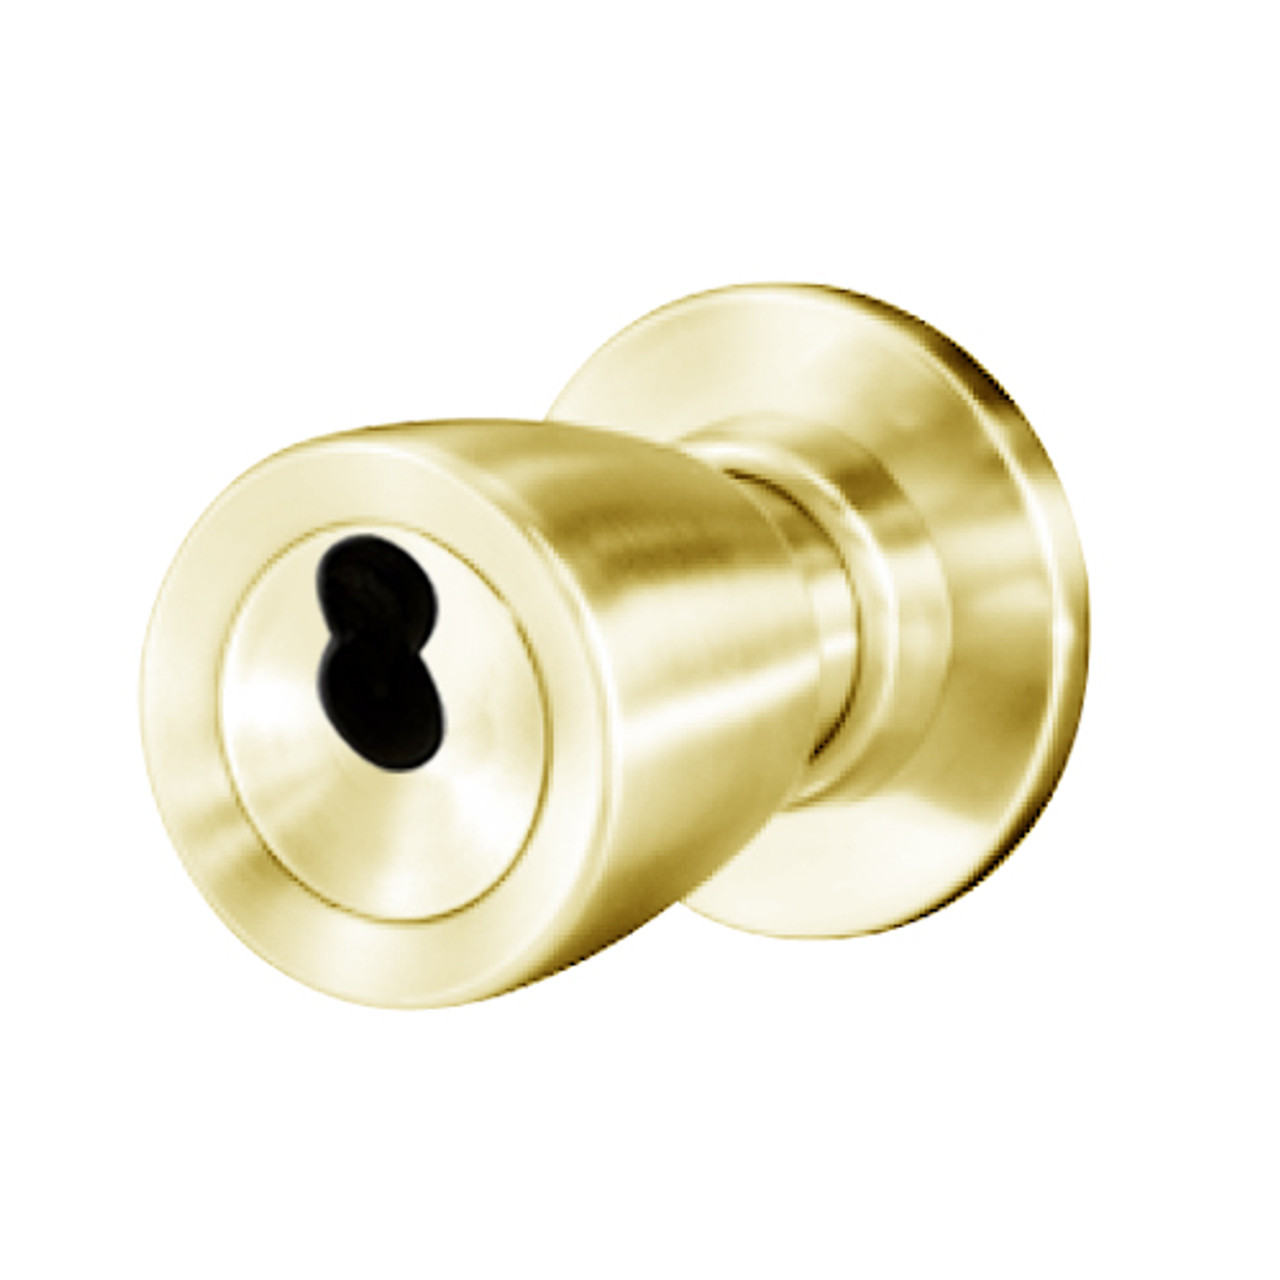 8K47W6CS3605 Best 8K Series Institutional Heavy Duty Cylindrical Knob Locks with Tulip Style in Bright Brass